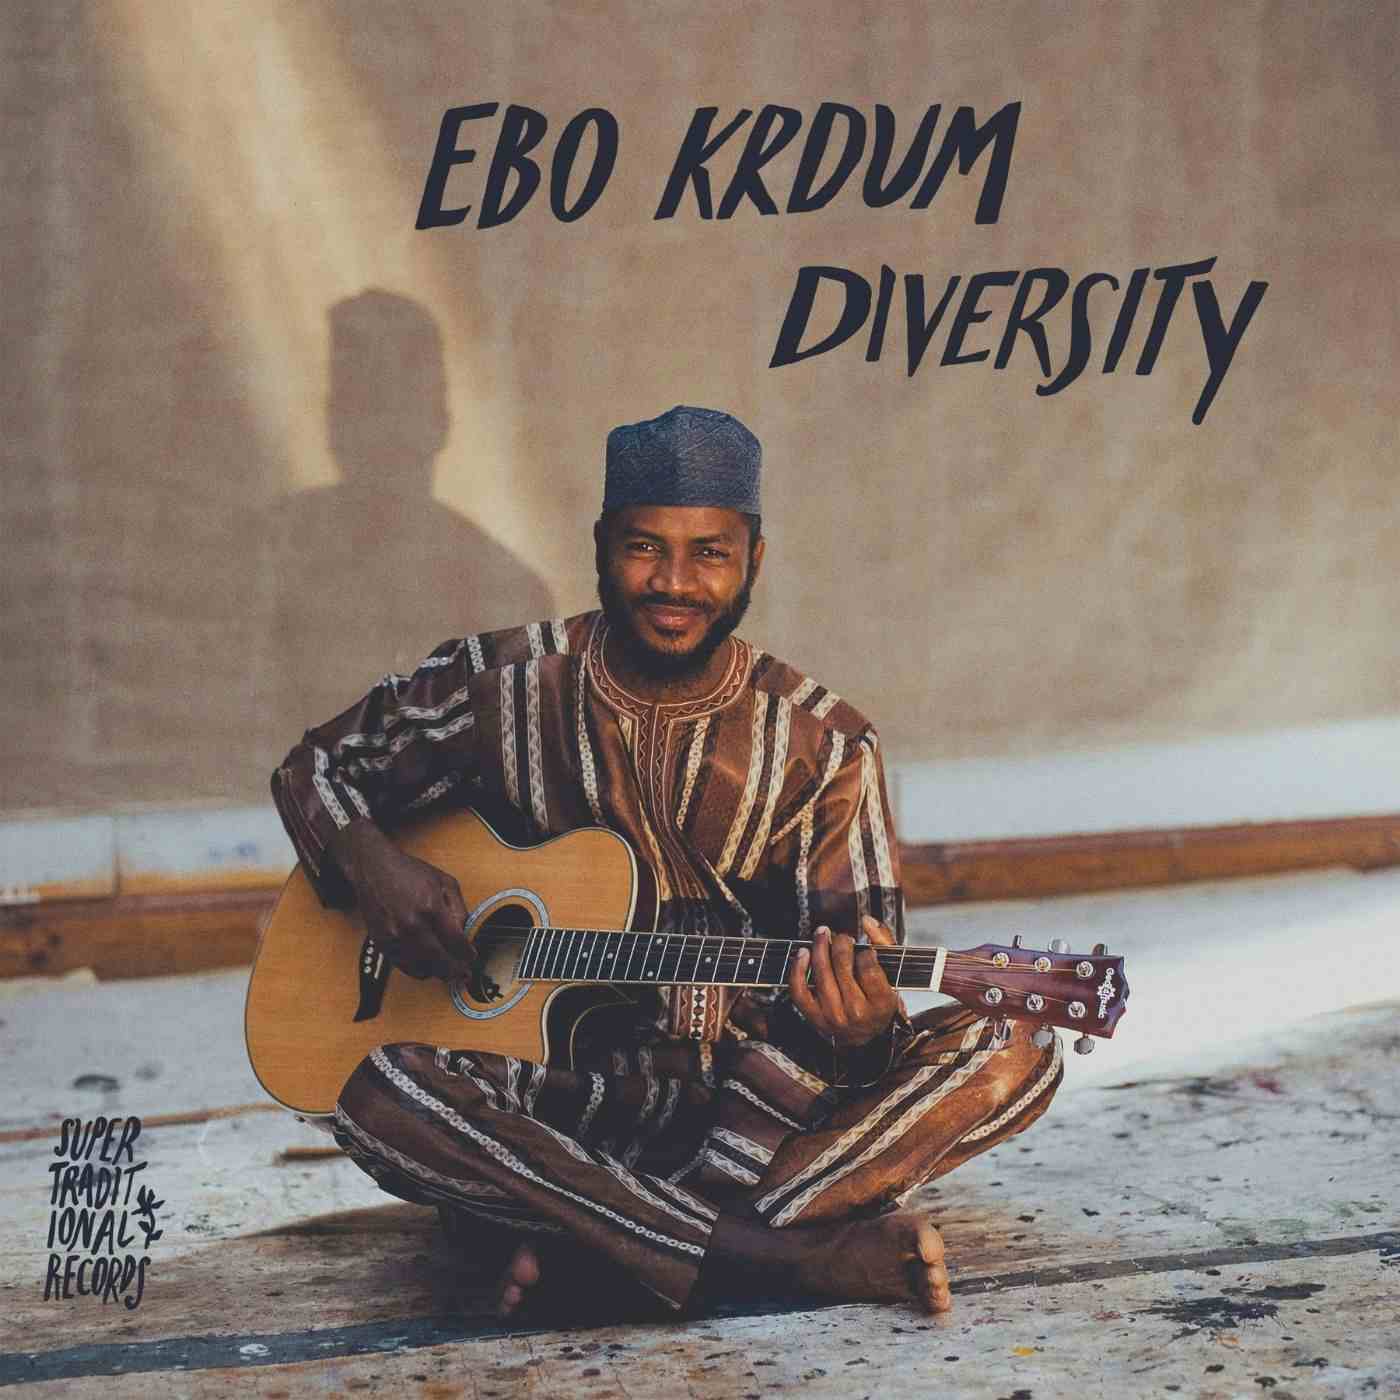 Photo of Ebo Krdums album Diversity